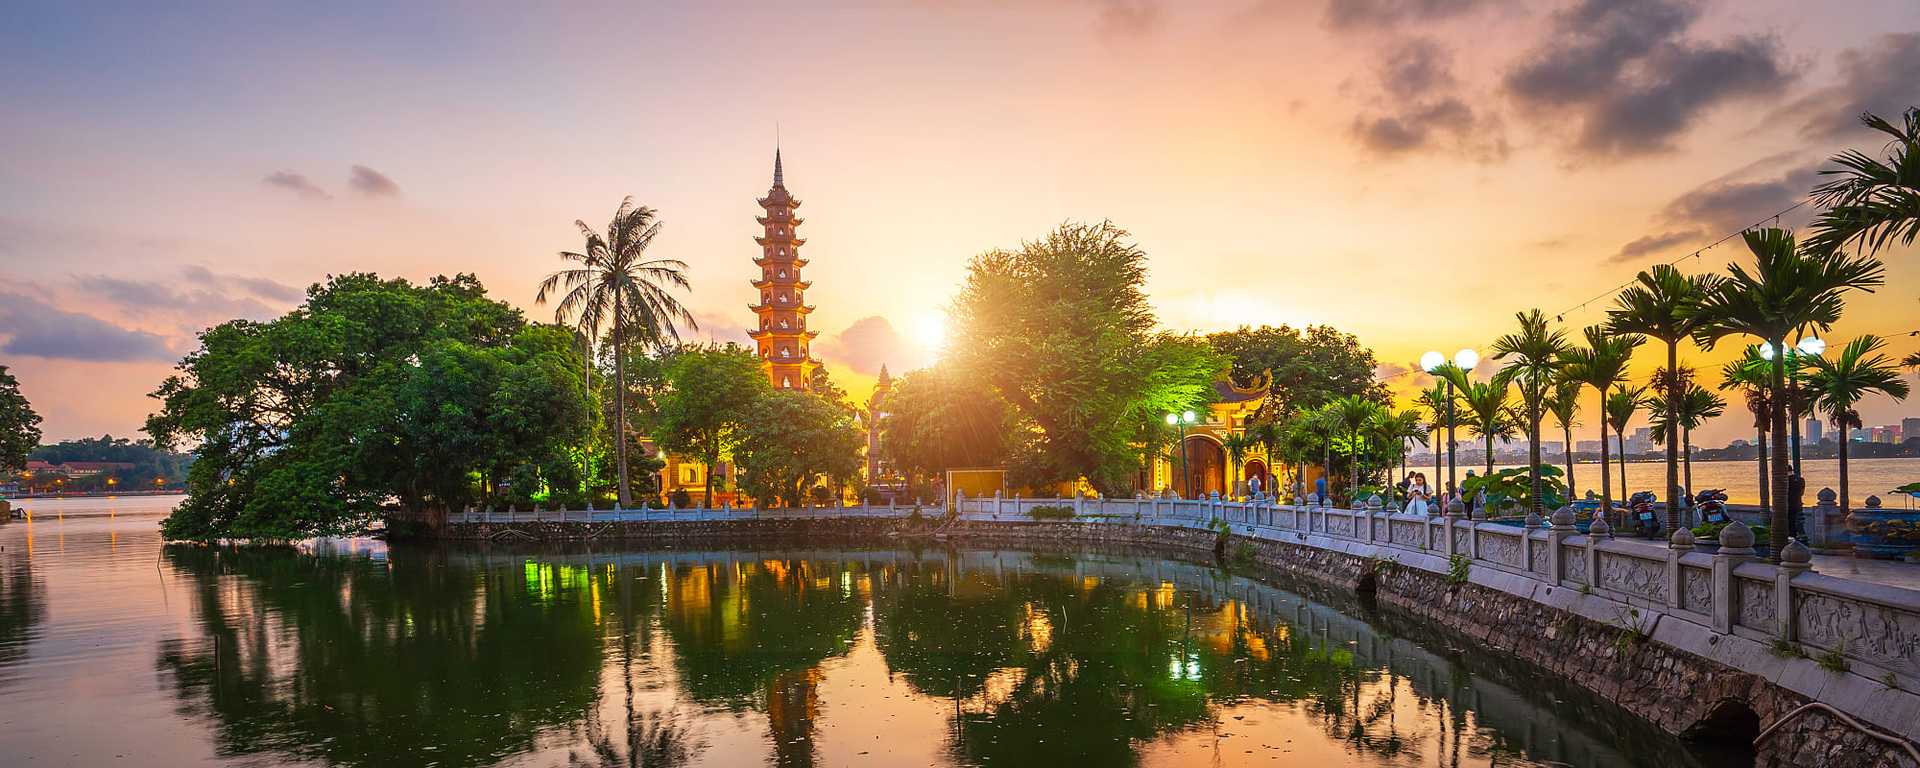 Tran Quoc pagoda and sunset sky in Hanoi, Vietnam